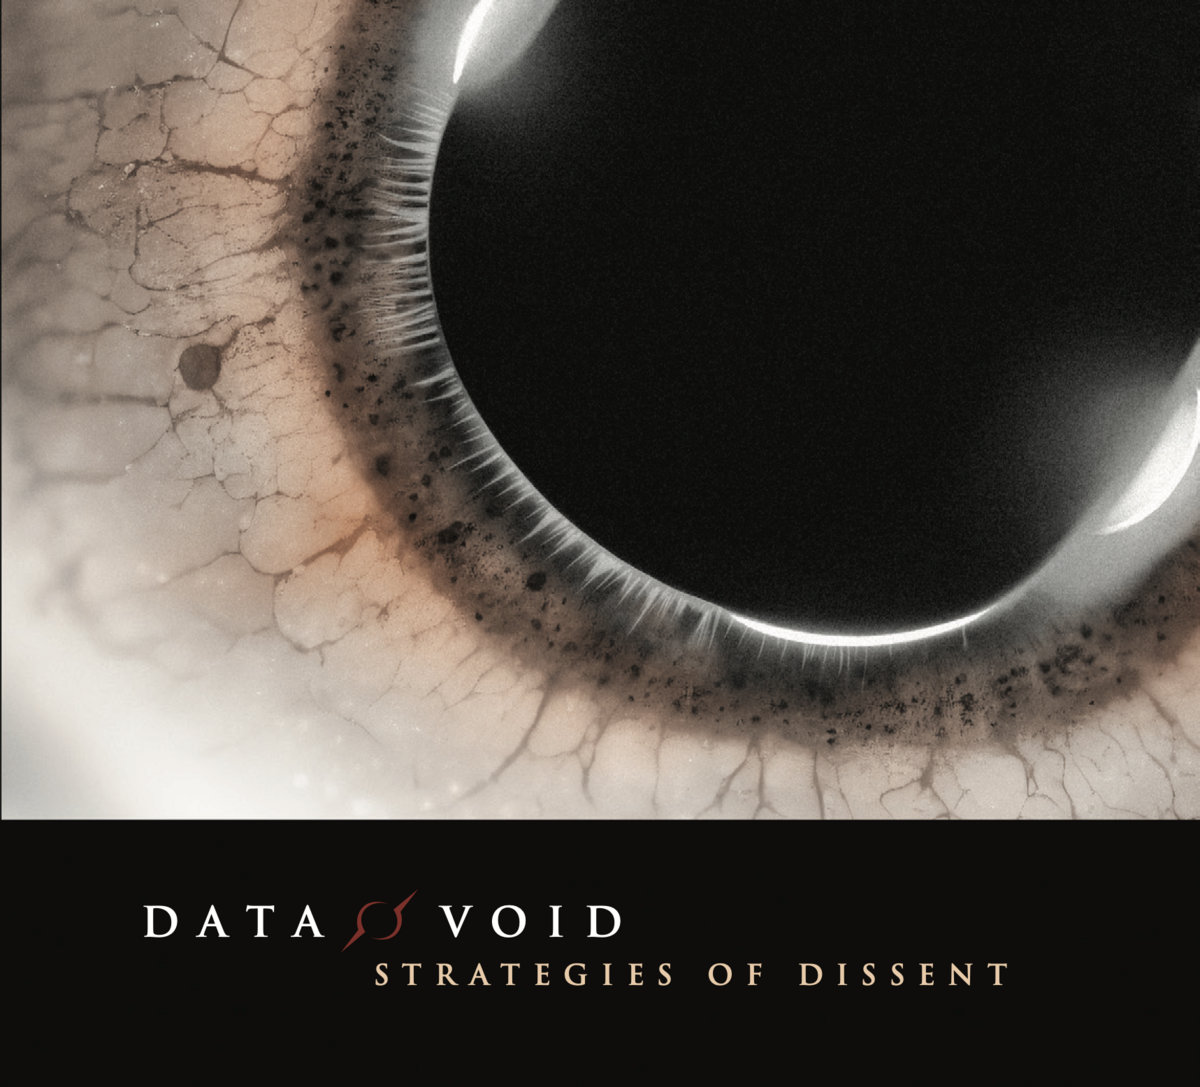 Data Void, “Strategies of Dissent”